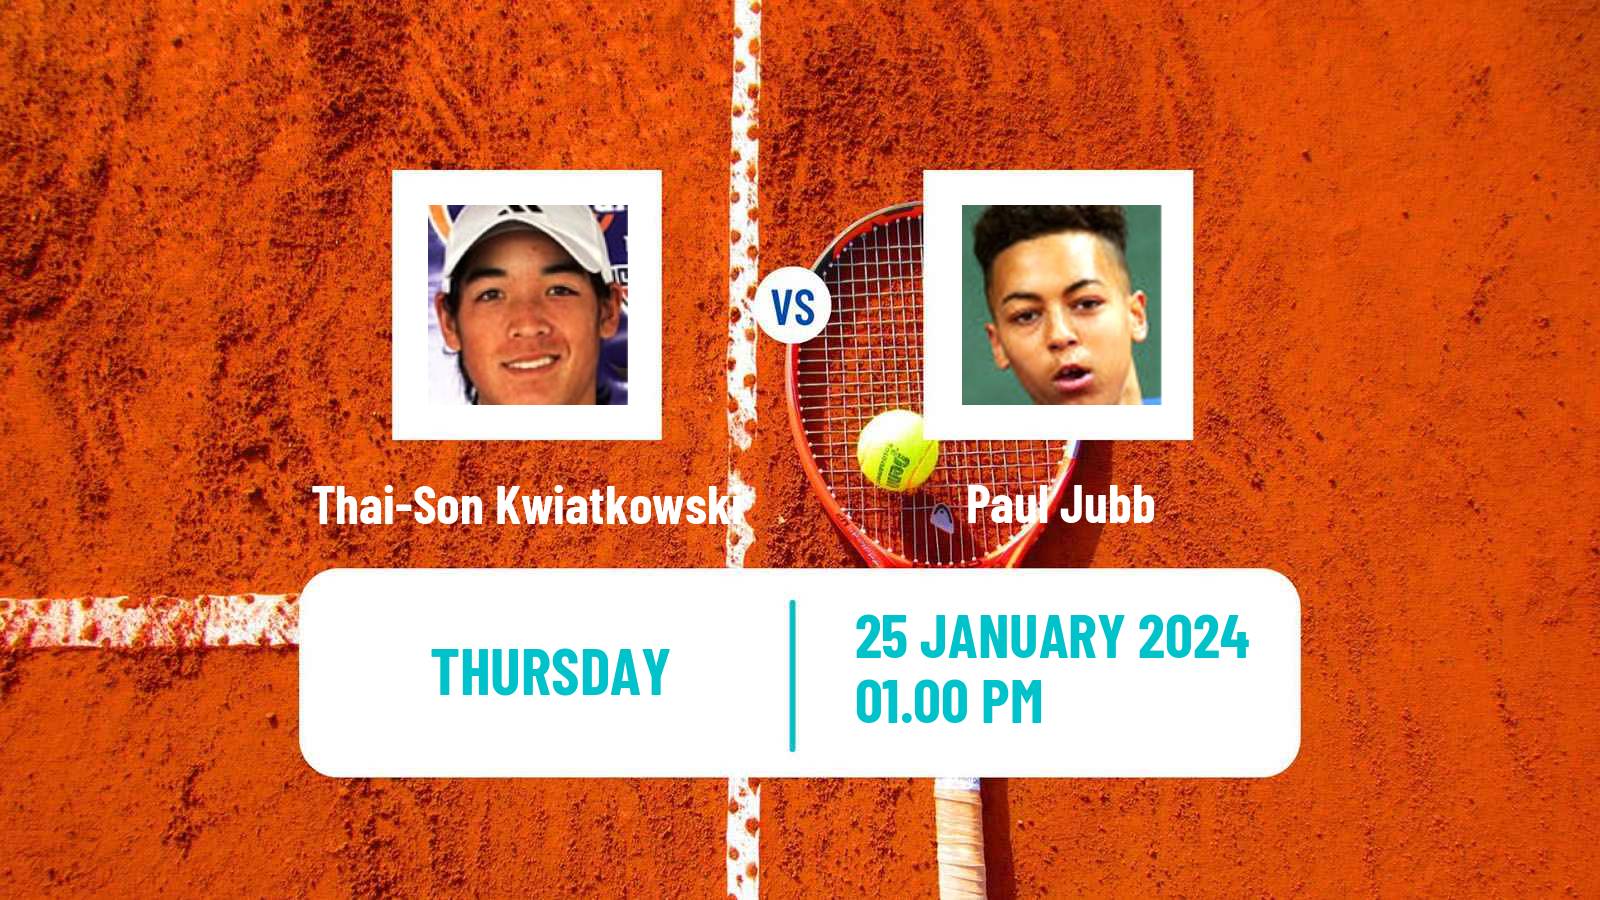 Tennis Indian Wells 2 Challenger Men Thai-Son Kwiatkowski - Paul Jubb